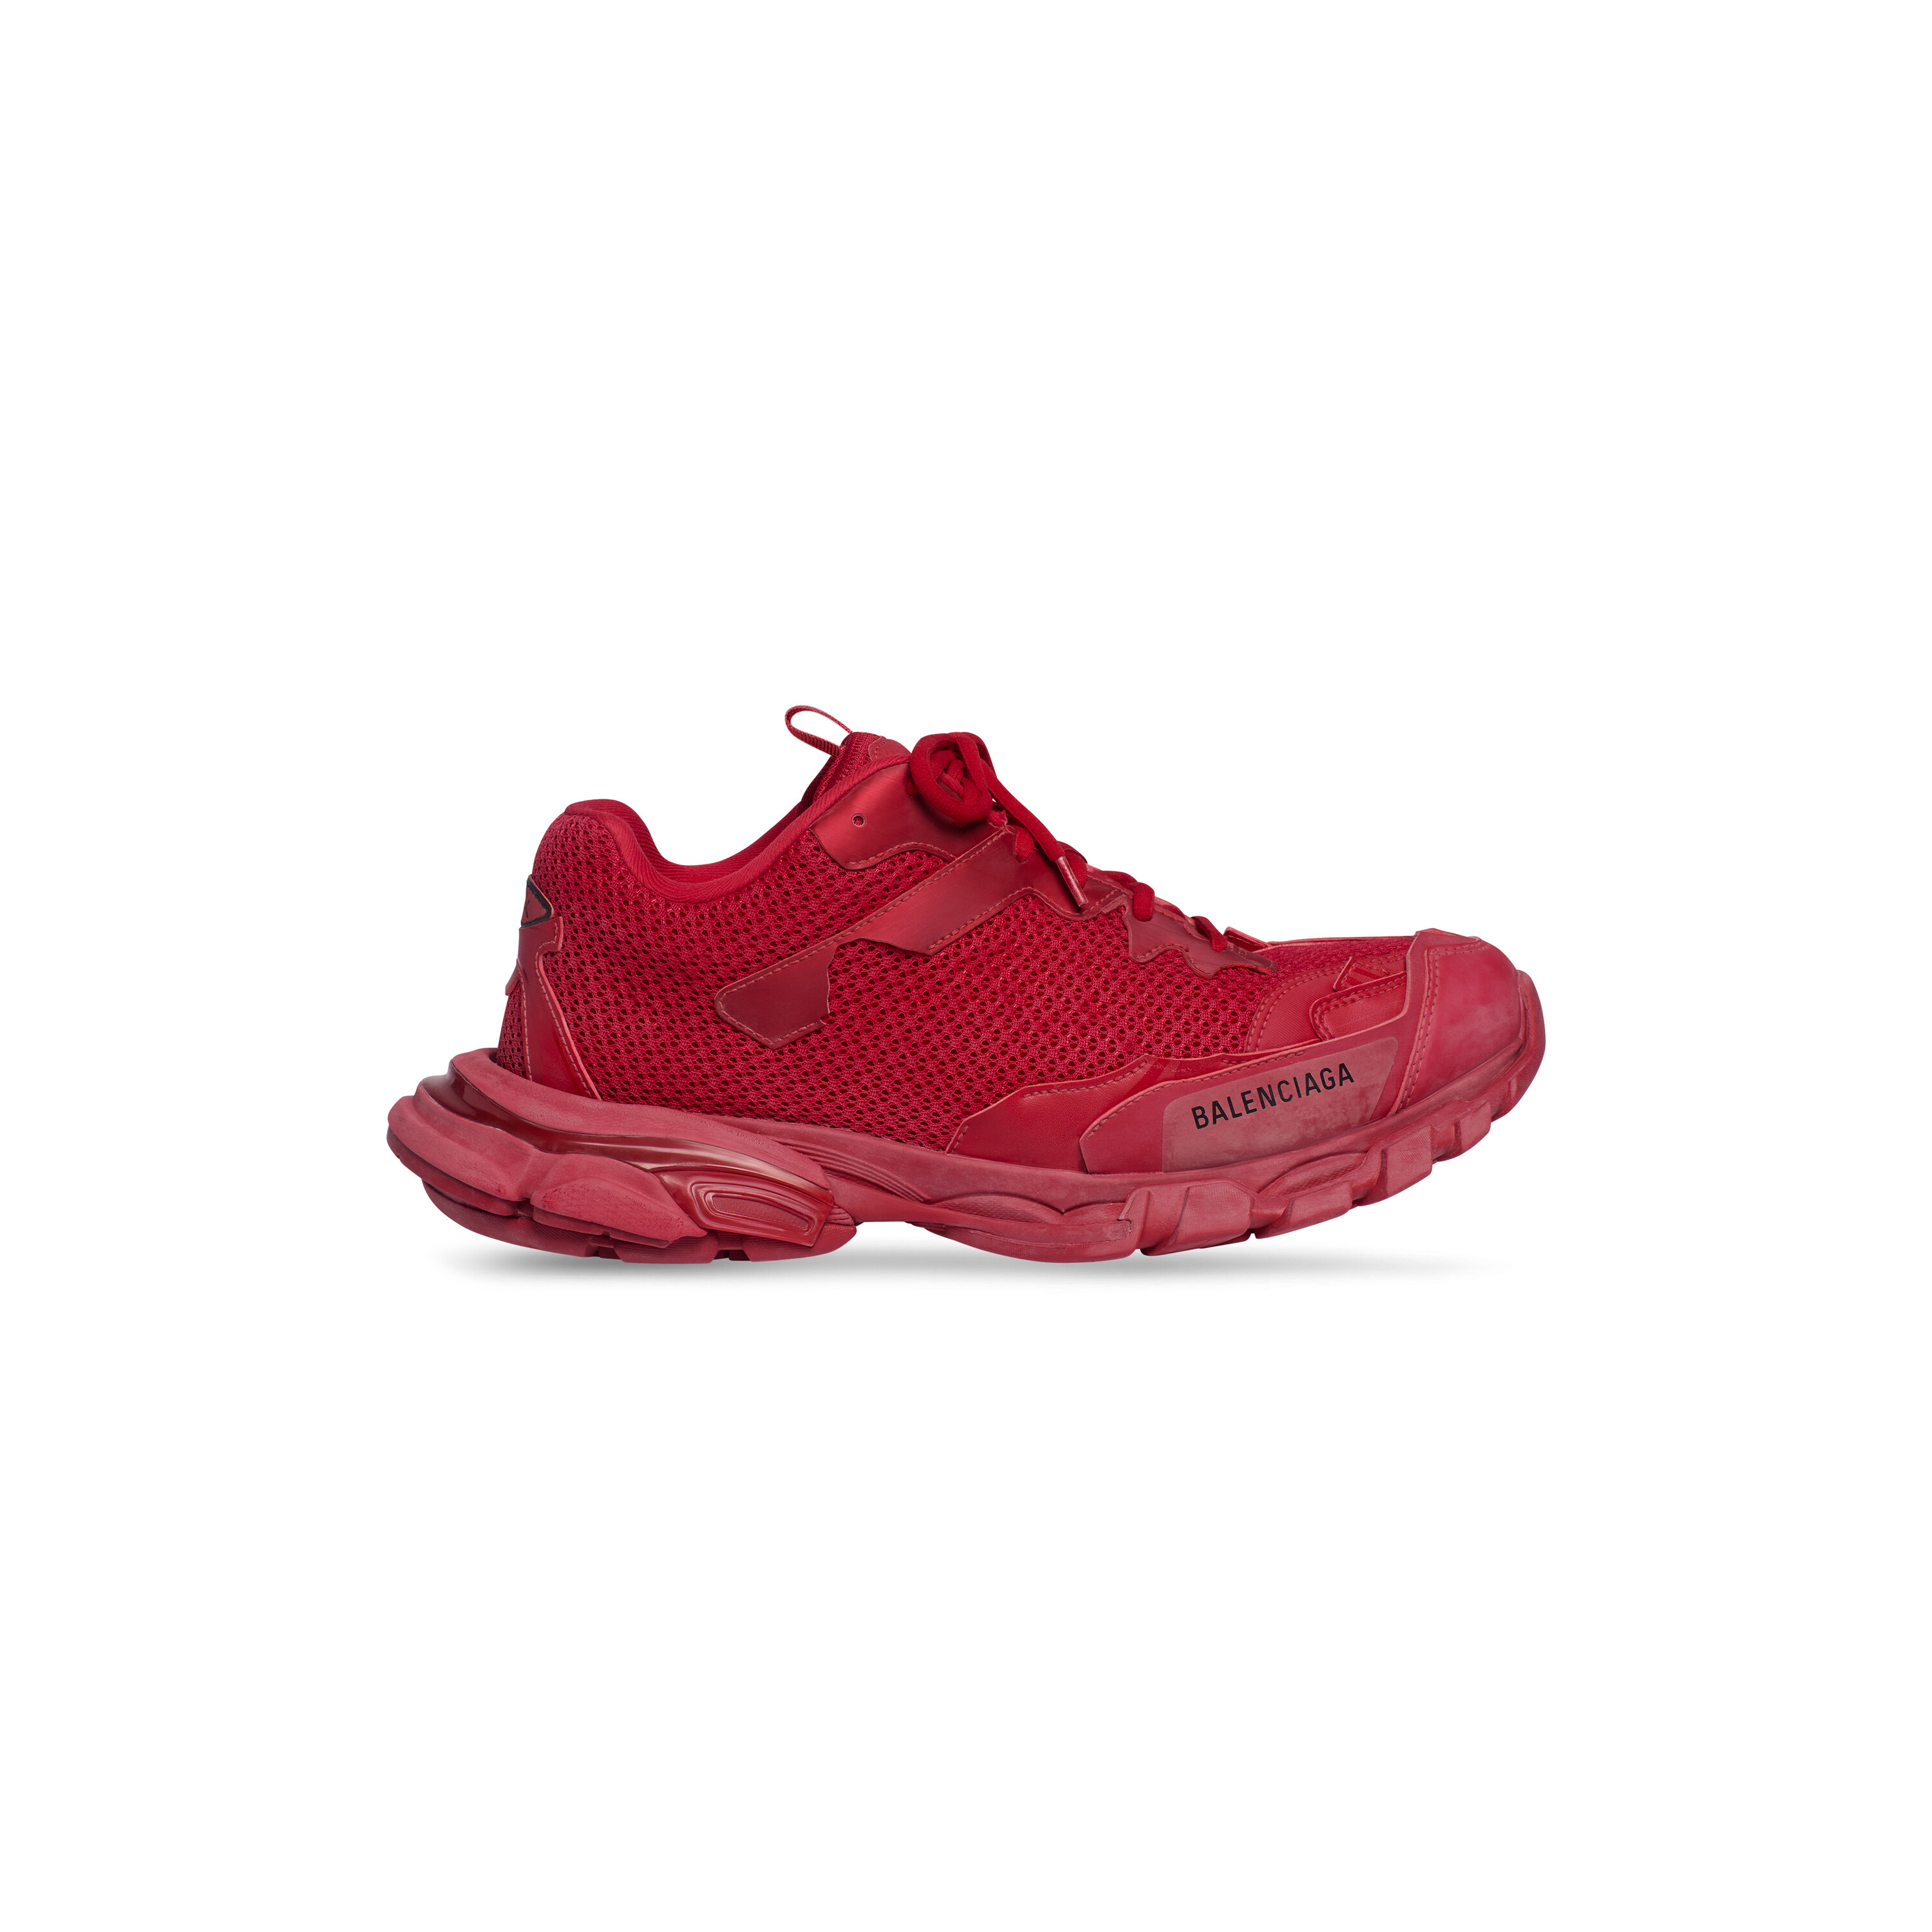 Runner Sneakers in Red  Balenciaga  Mytheresa